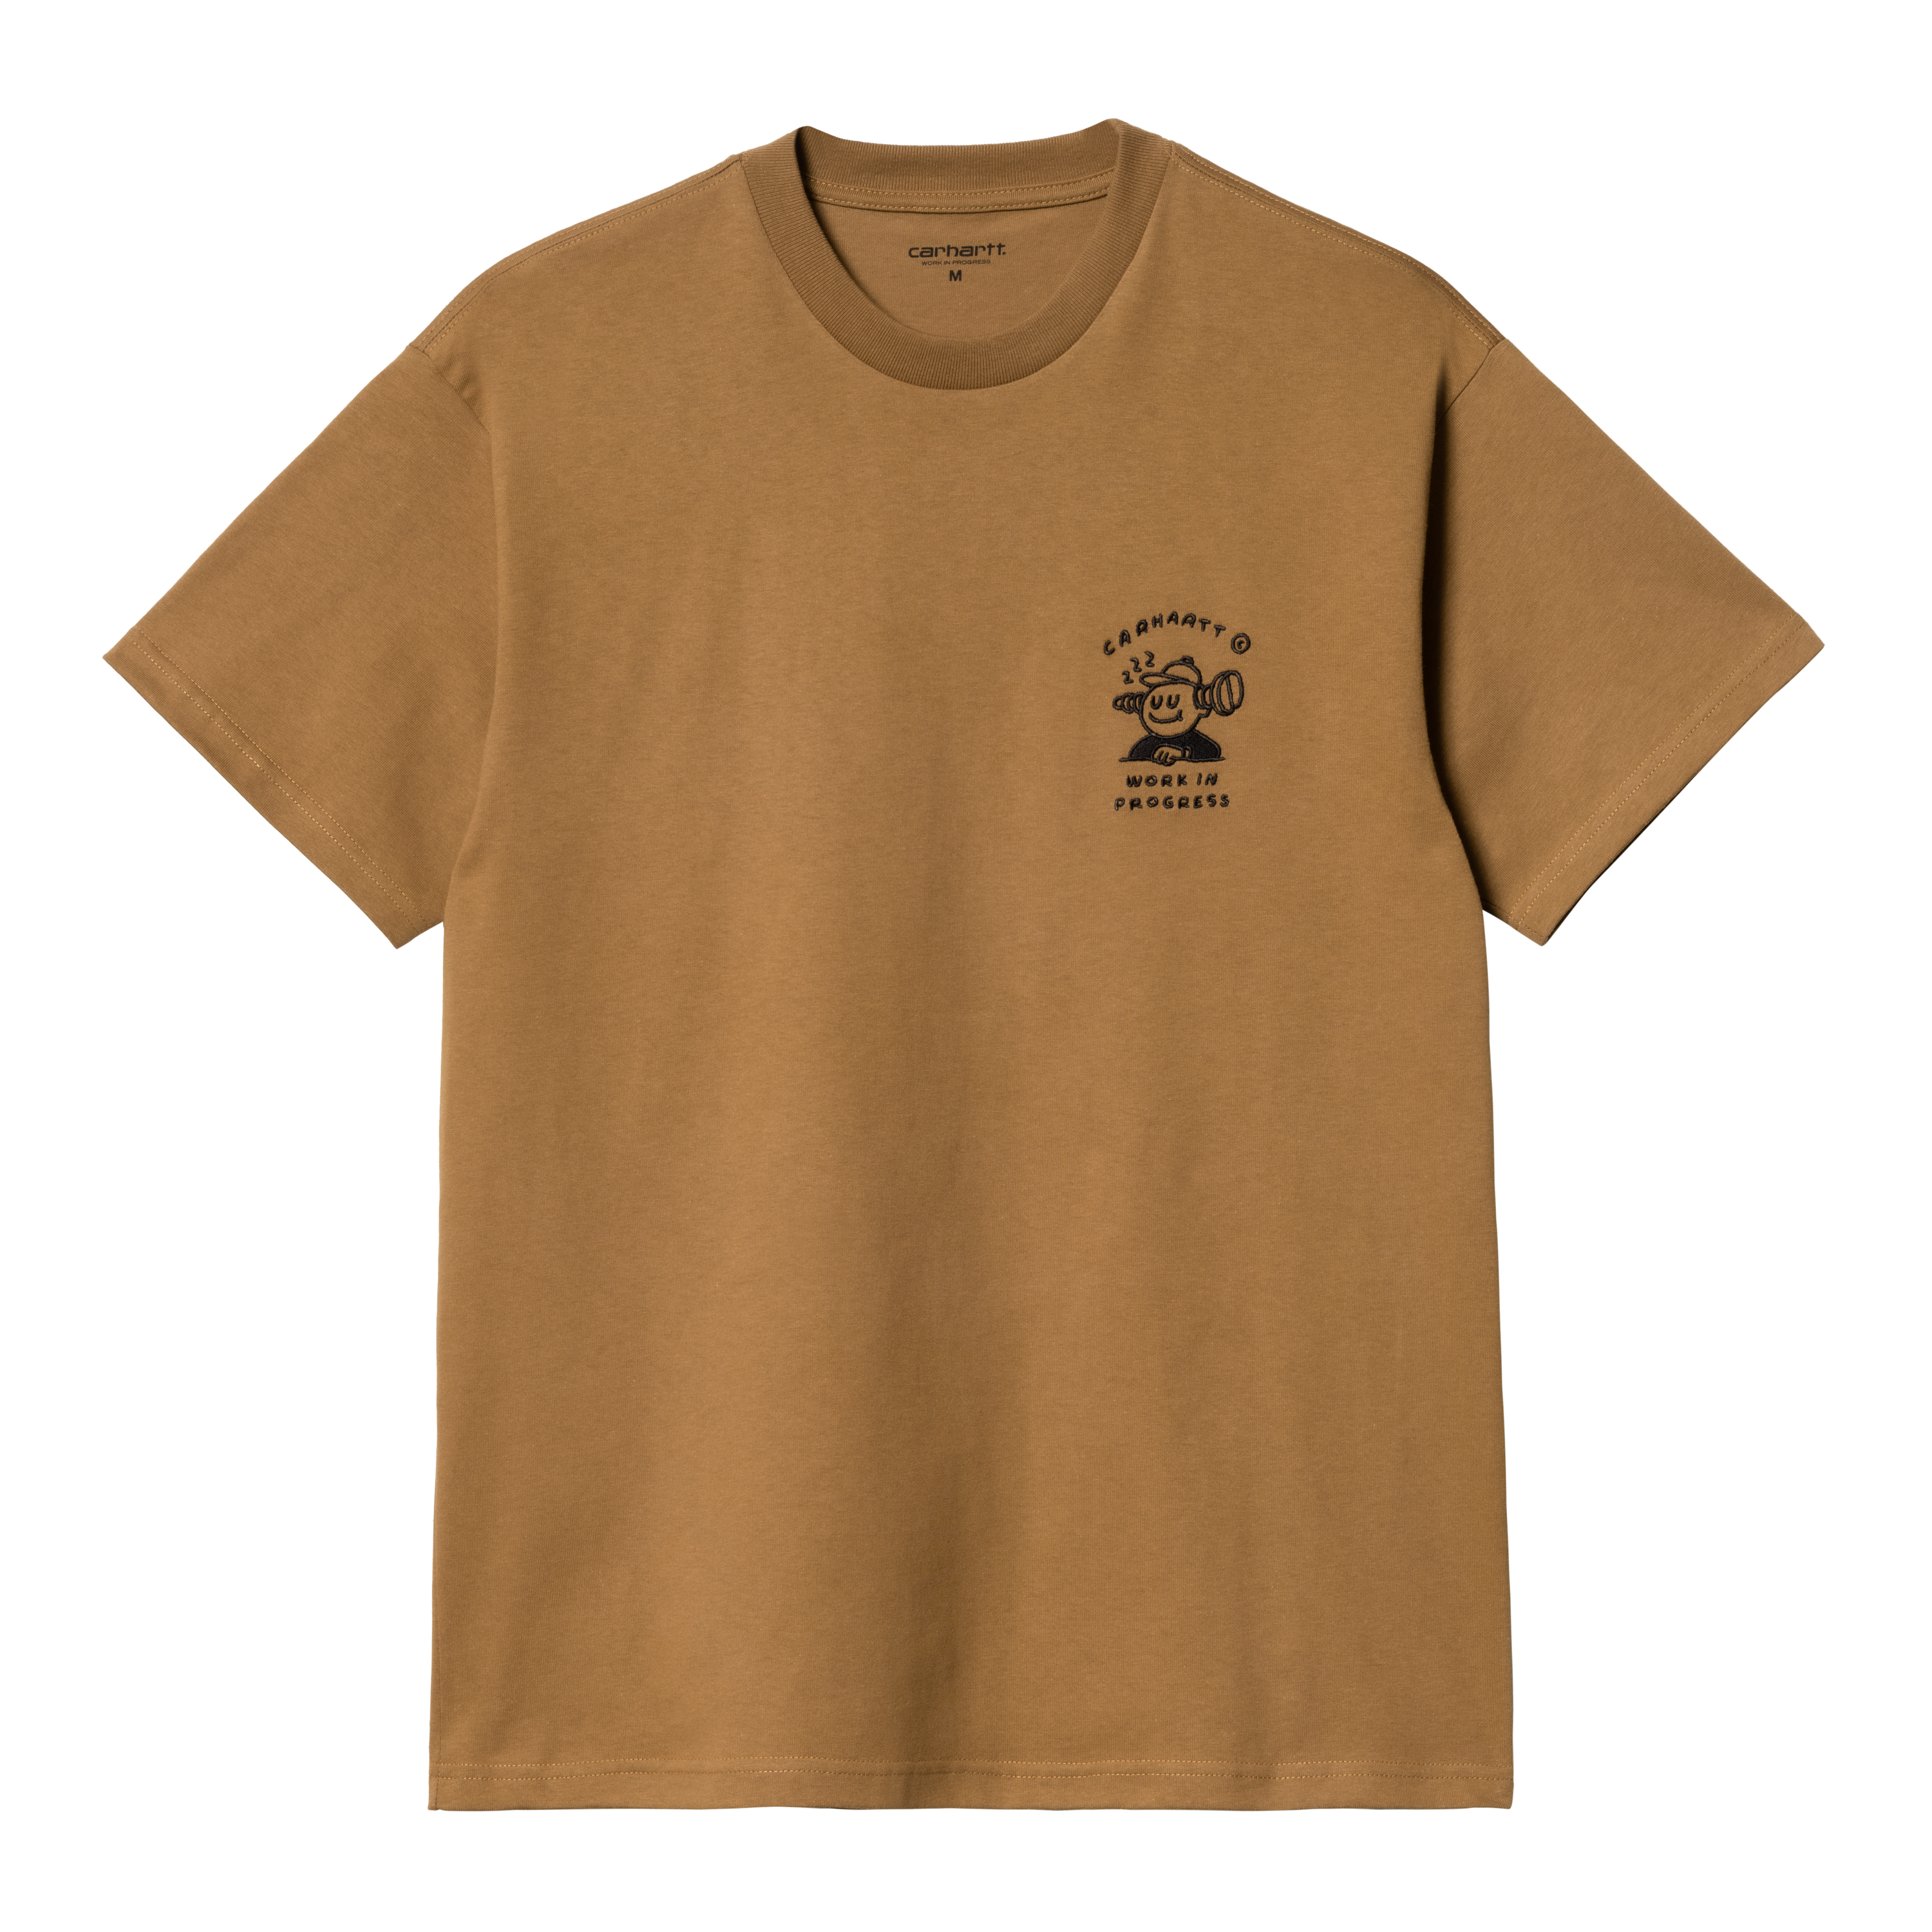 Carhartt WIP Short Sleeve Icons T-Shirt in Marrone